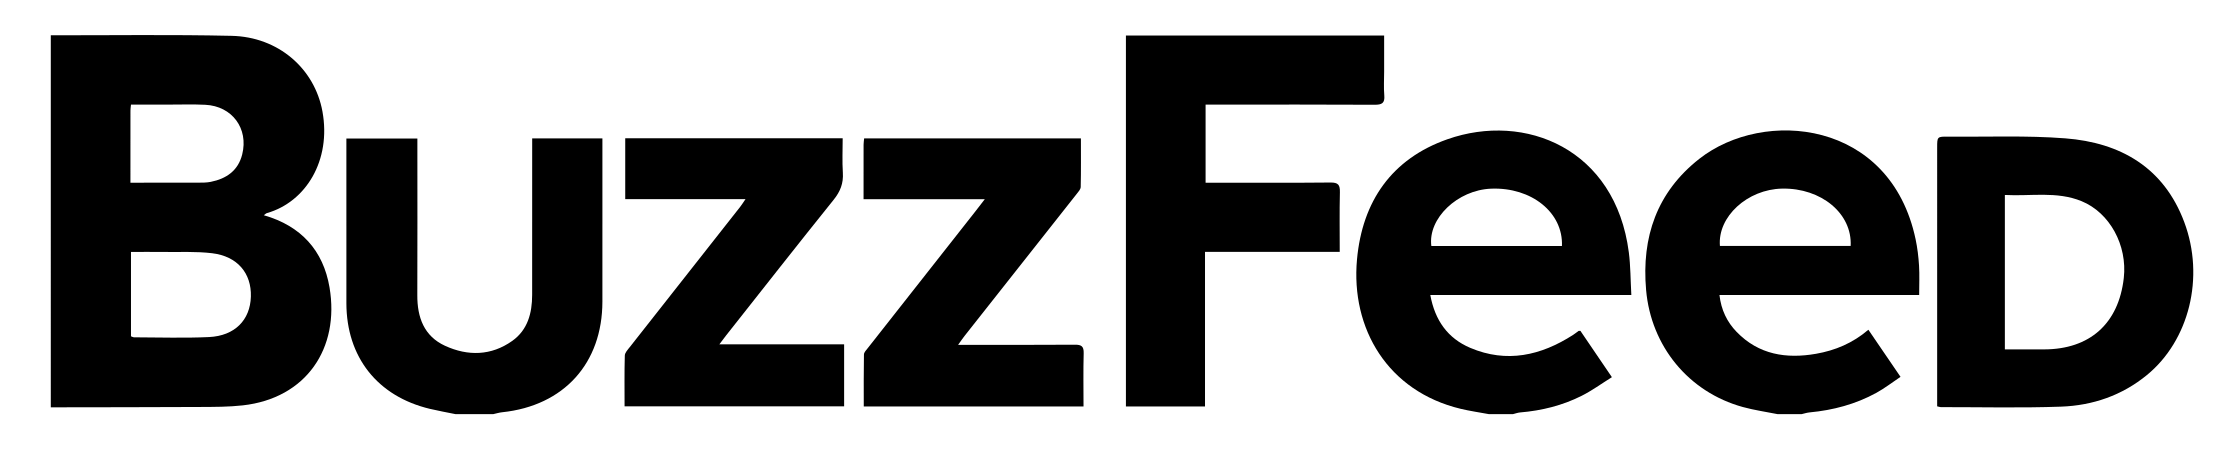 buzzfeed-logo-black-transparent copy